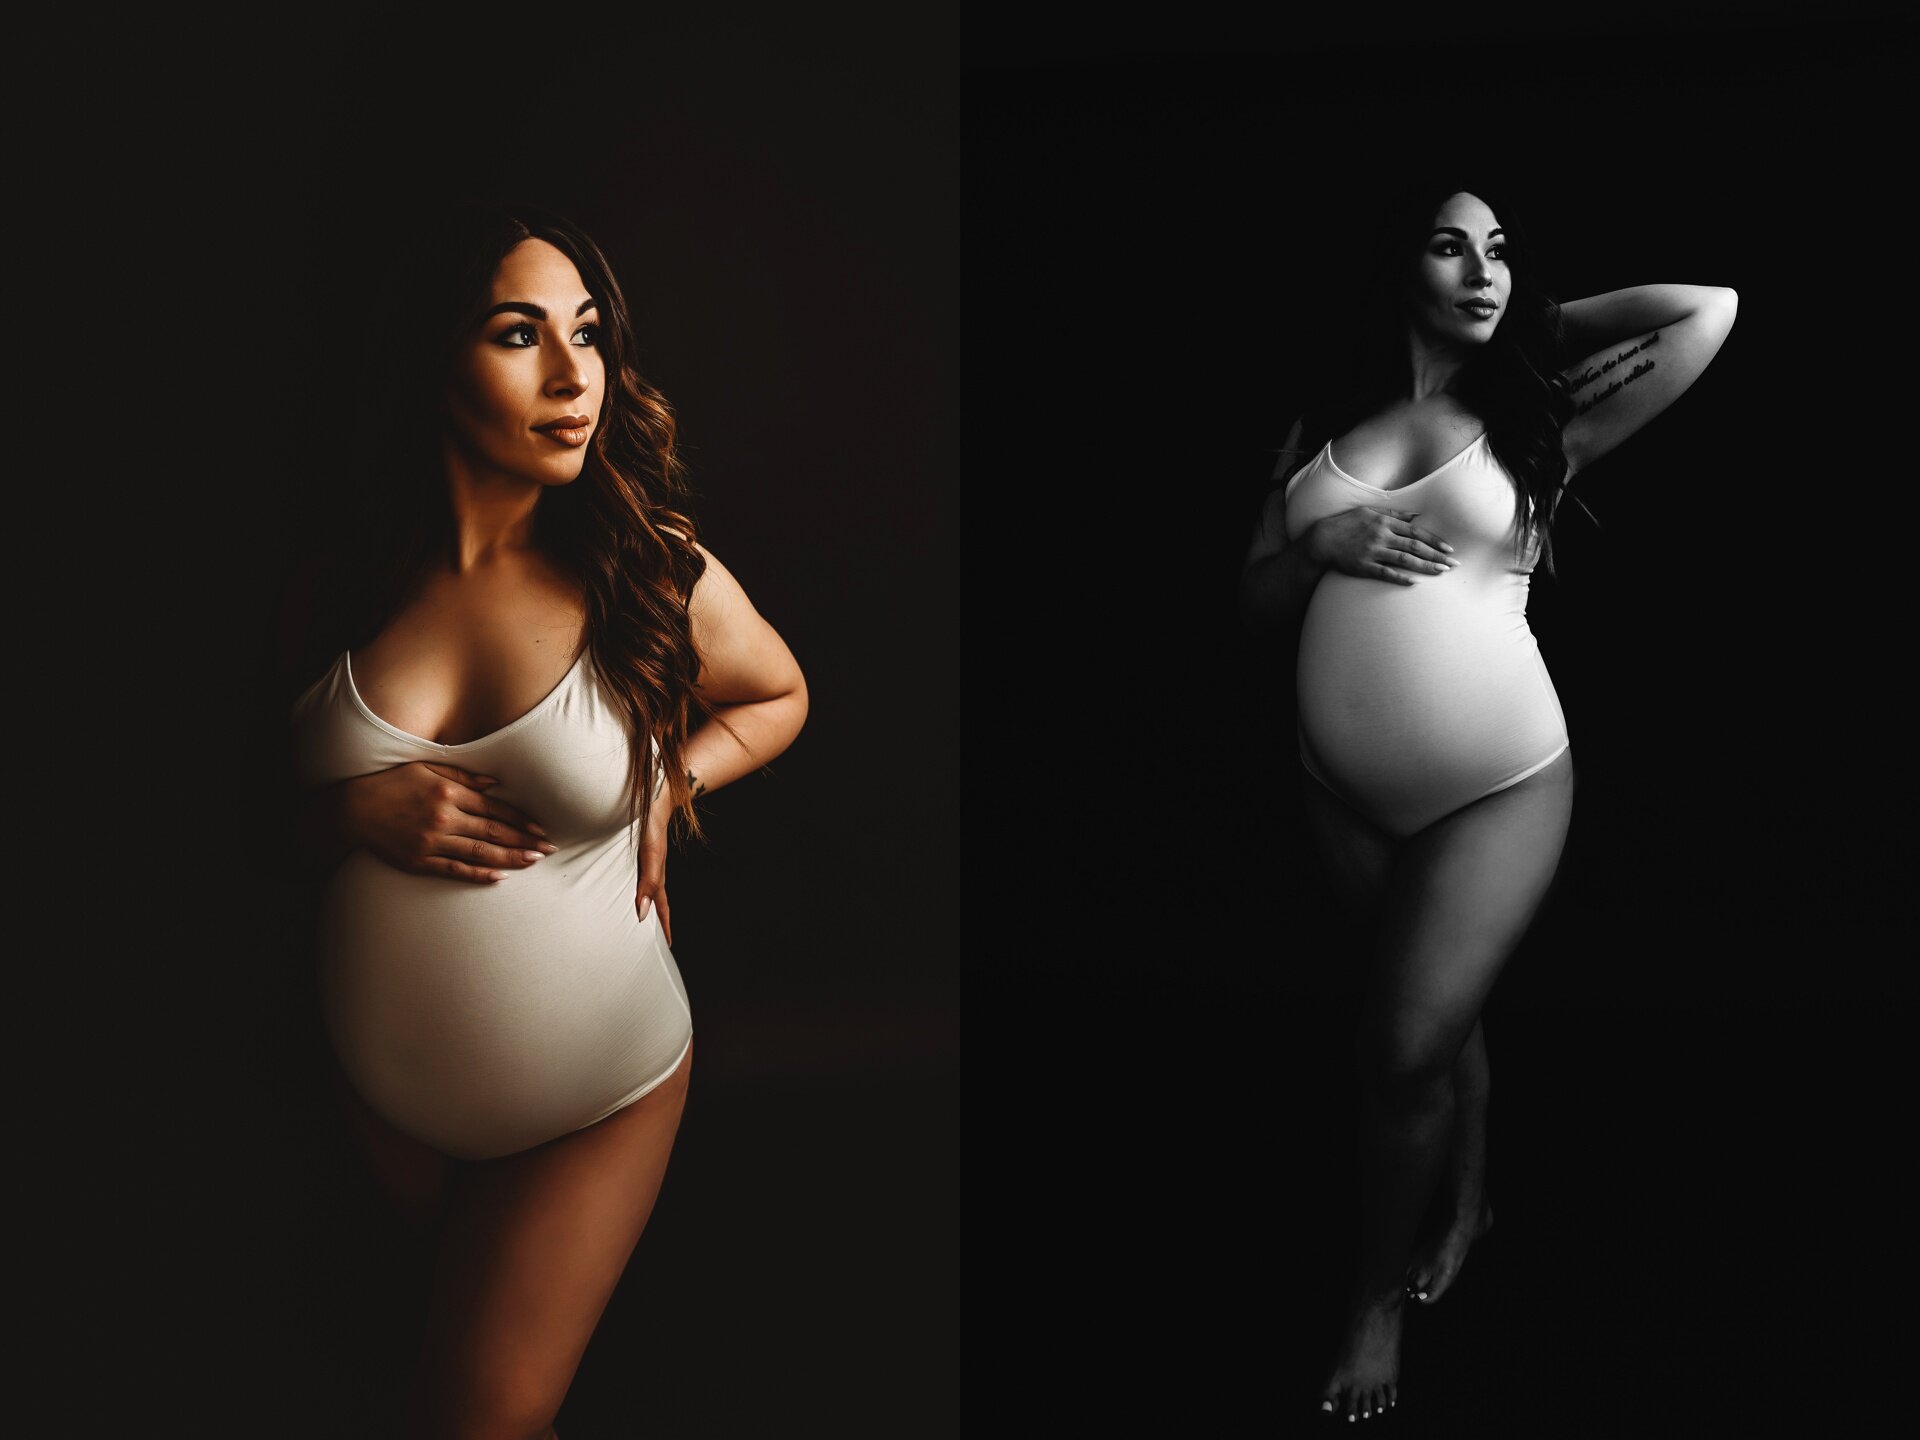 studio maternity photo shoots near me, st pete fl 